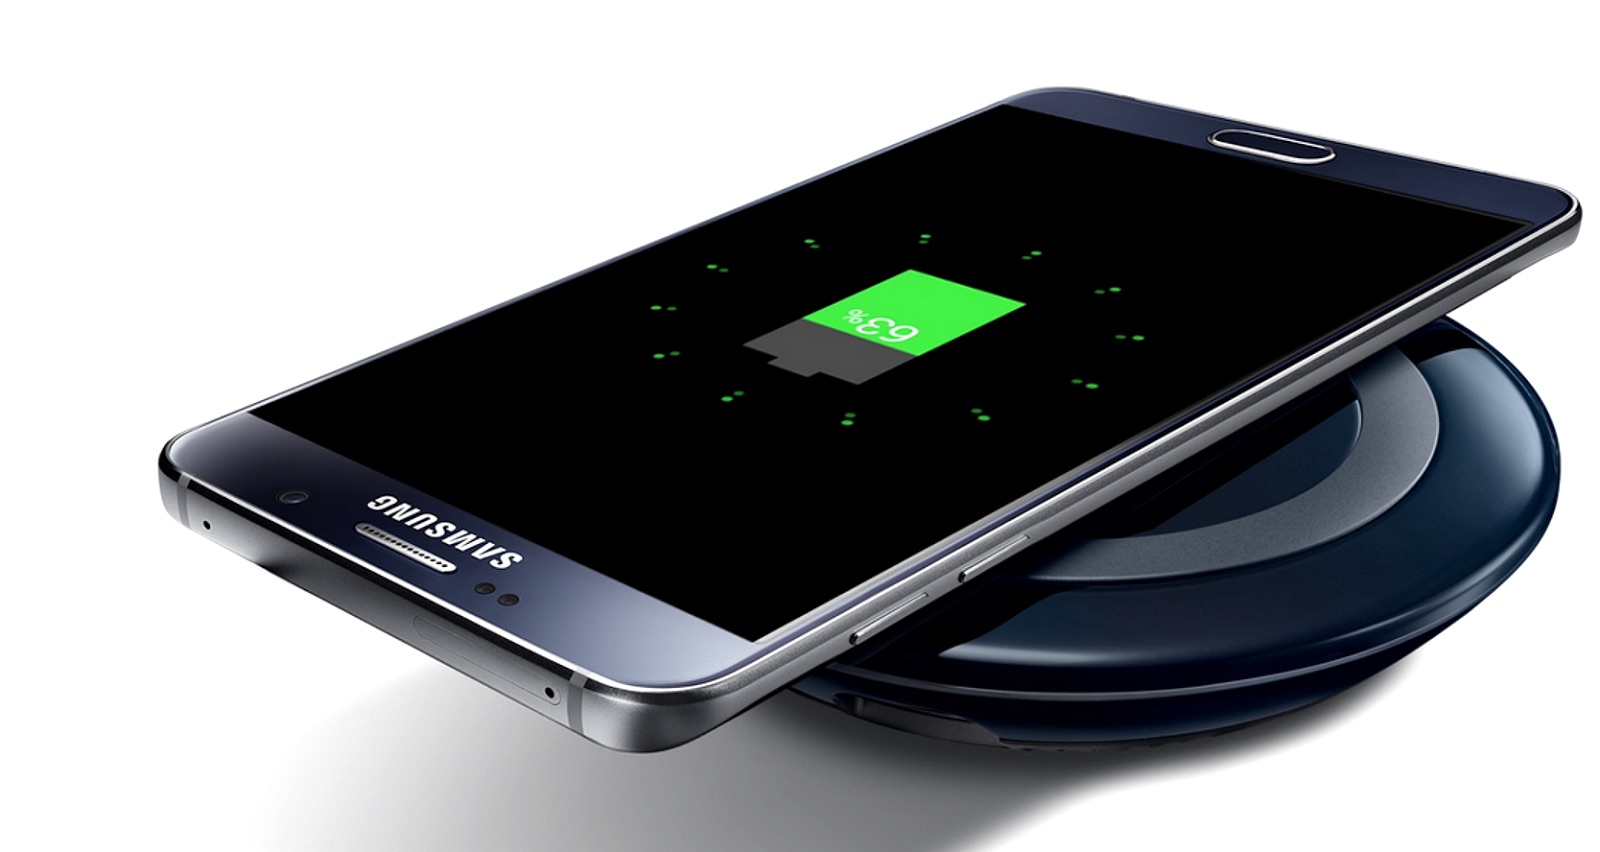 Samsung Galaxy S7 Wireless Charging